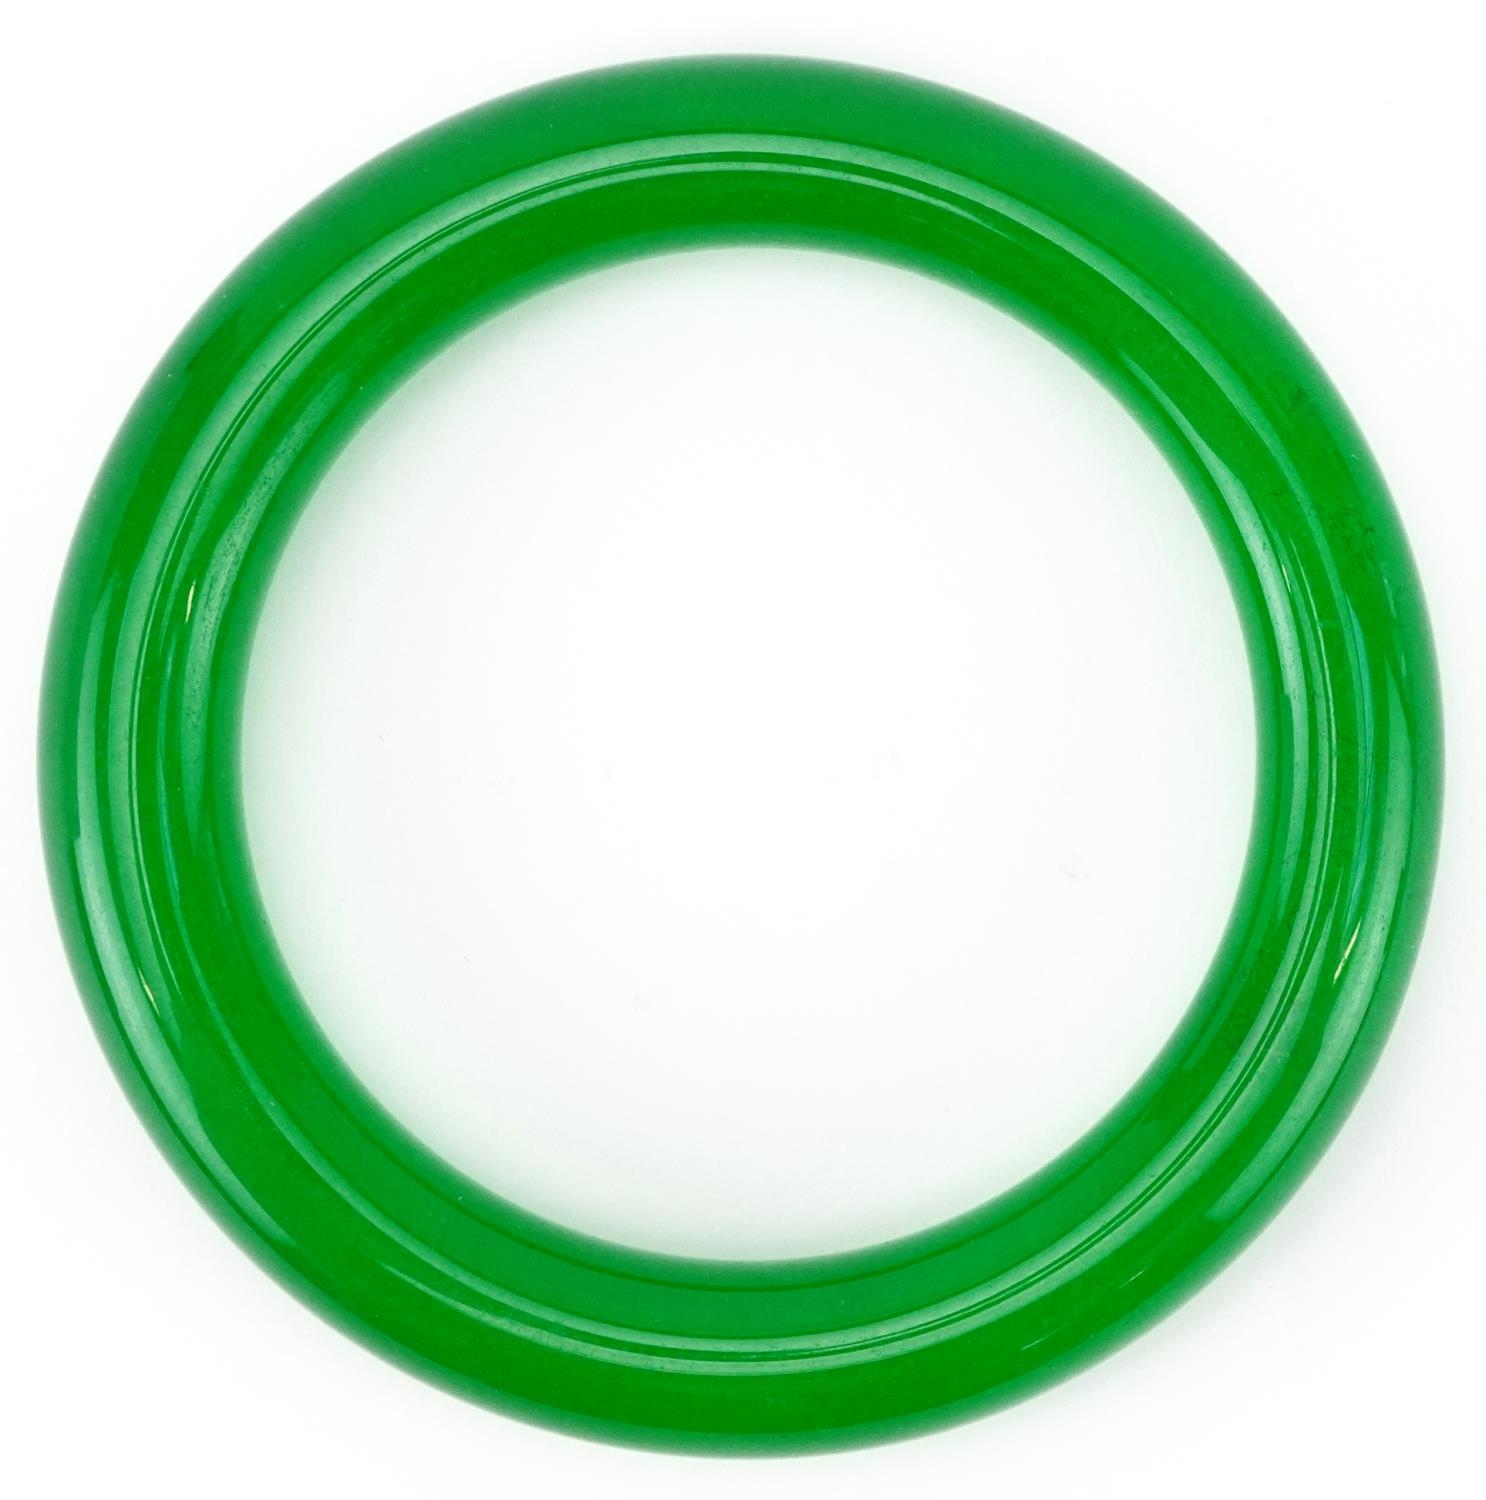 Chinese green jade bangle, 8.5cm in diameter, 74.5g - Image 3 of 3